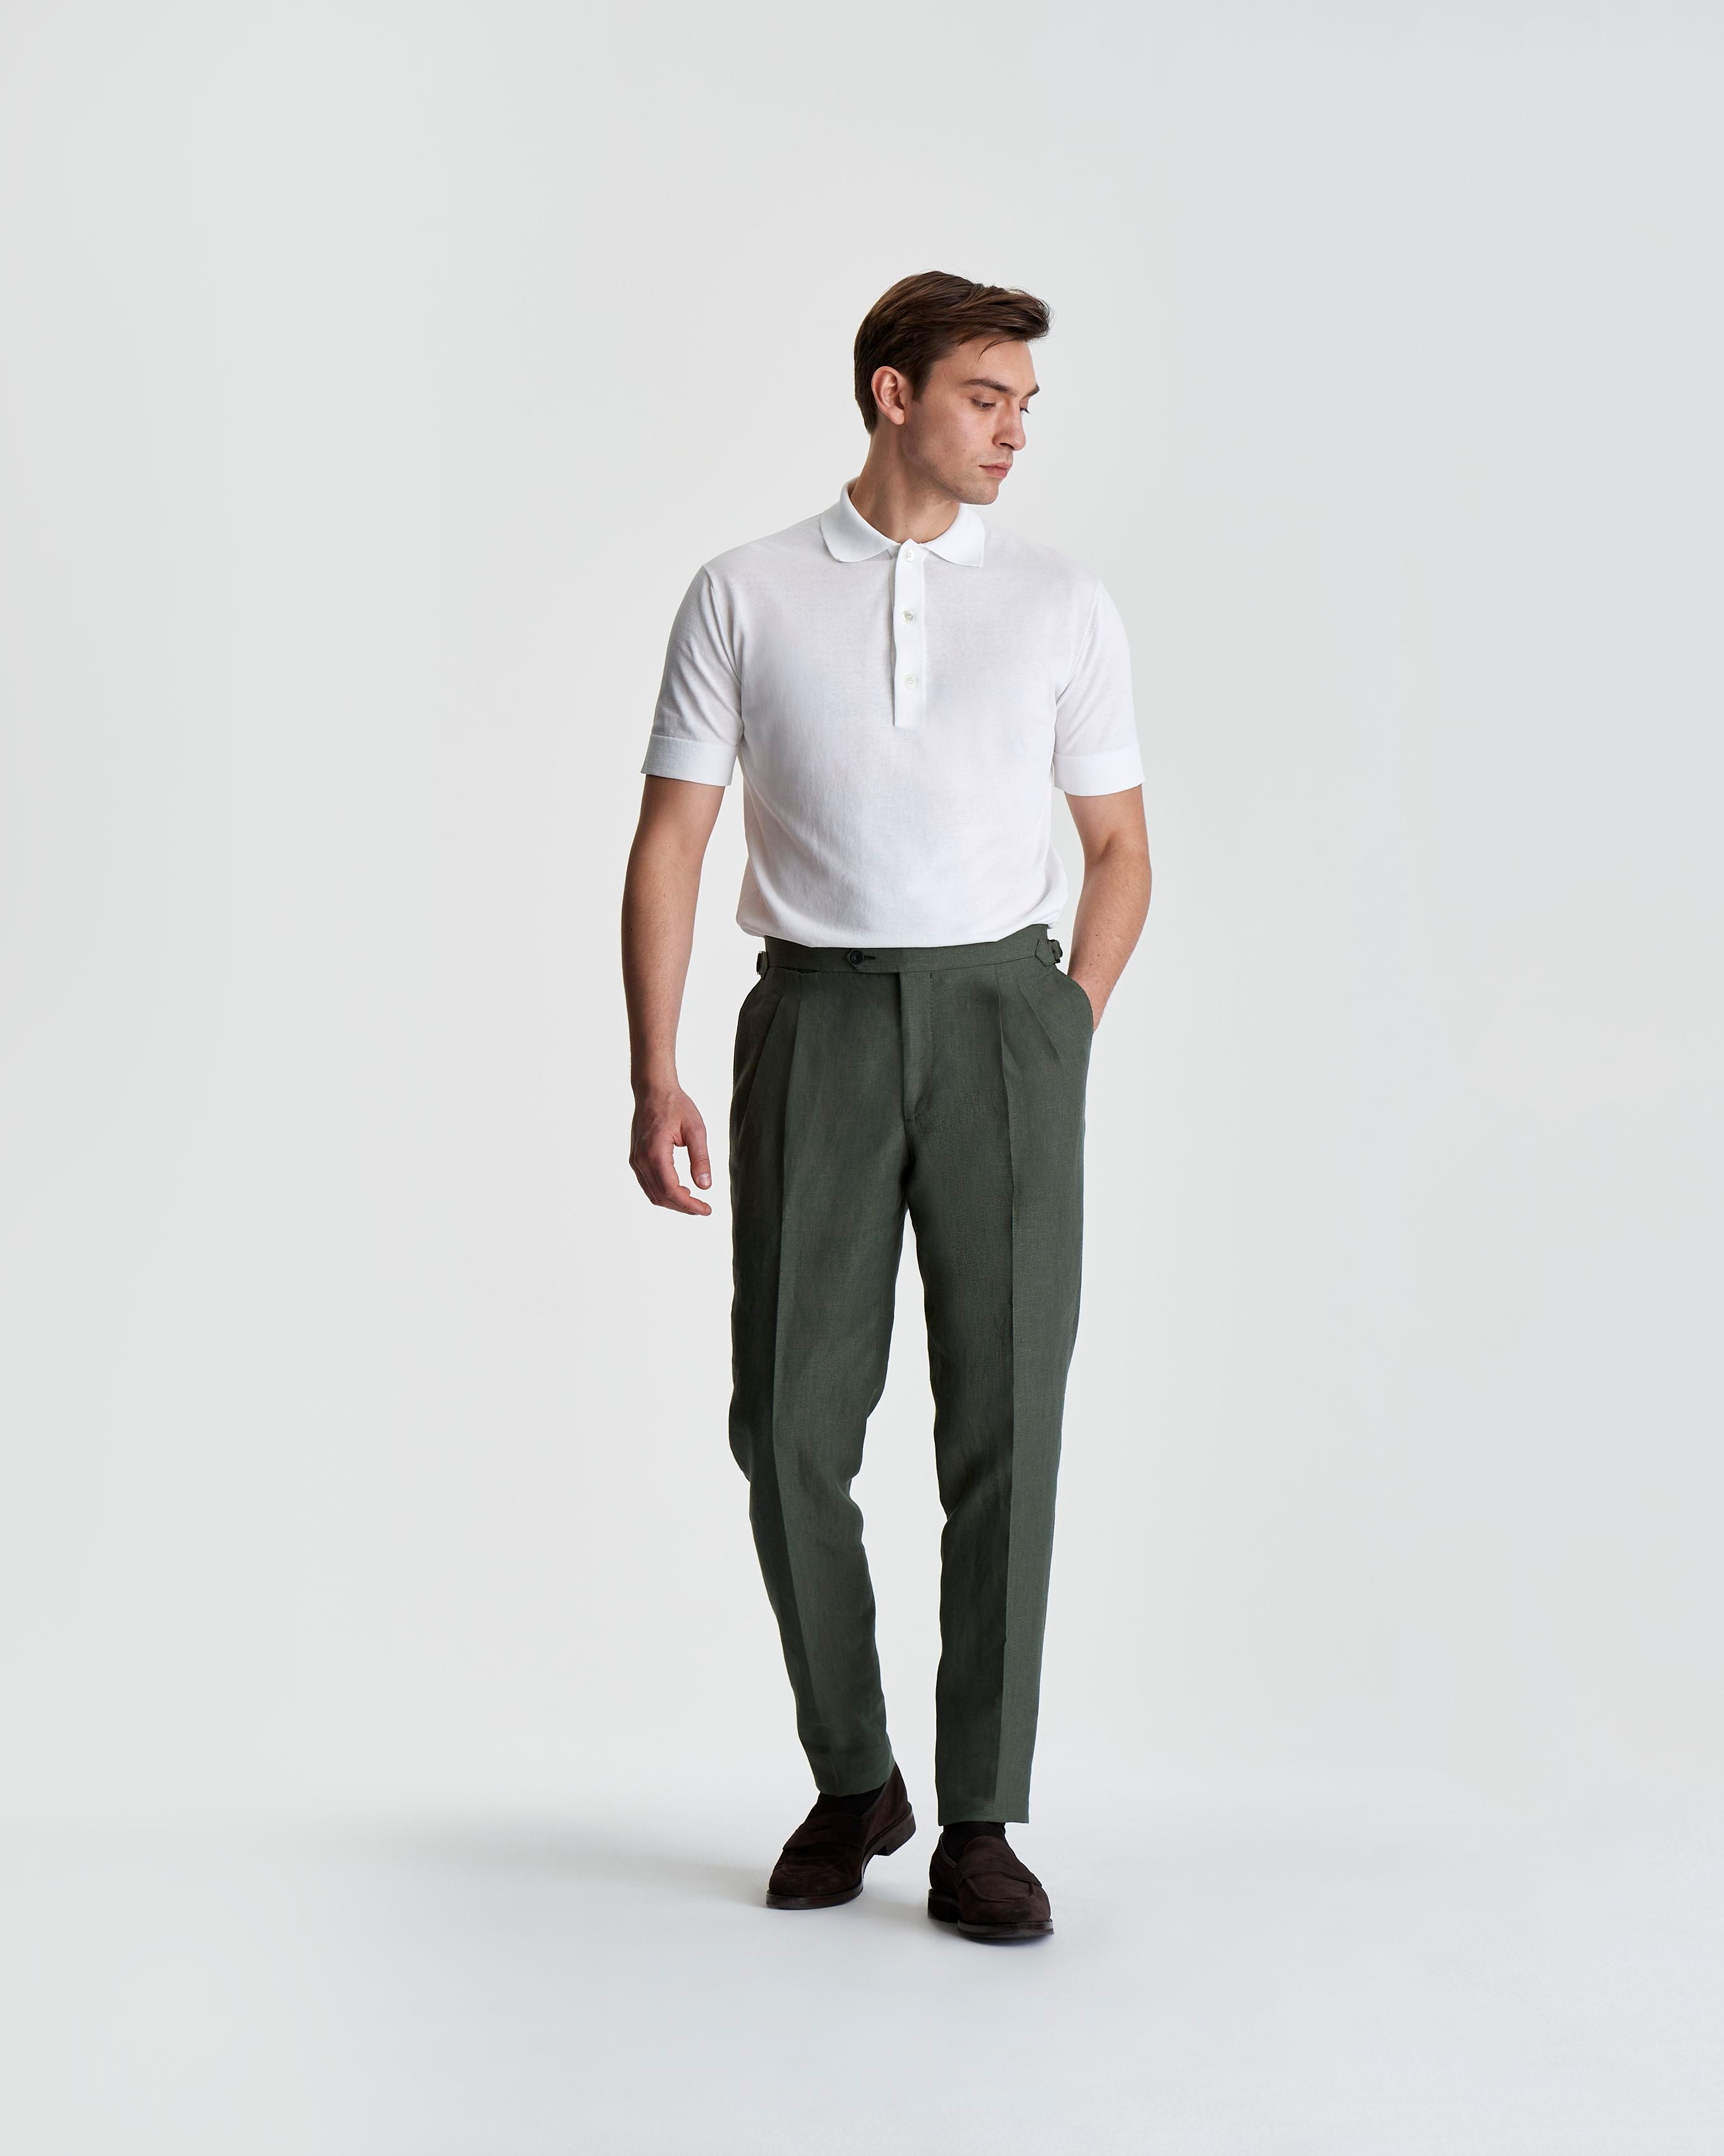 Crepe Cotton Polo Shirt White Model Full length 